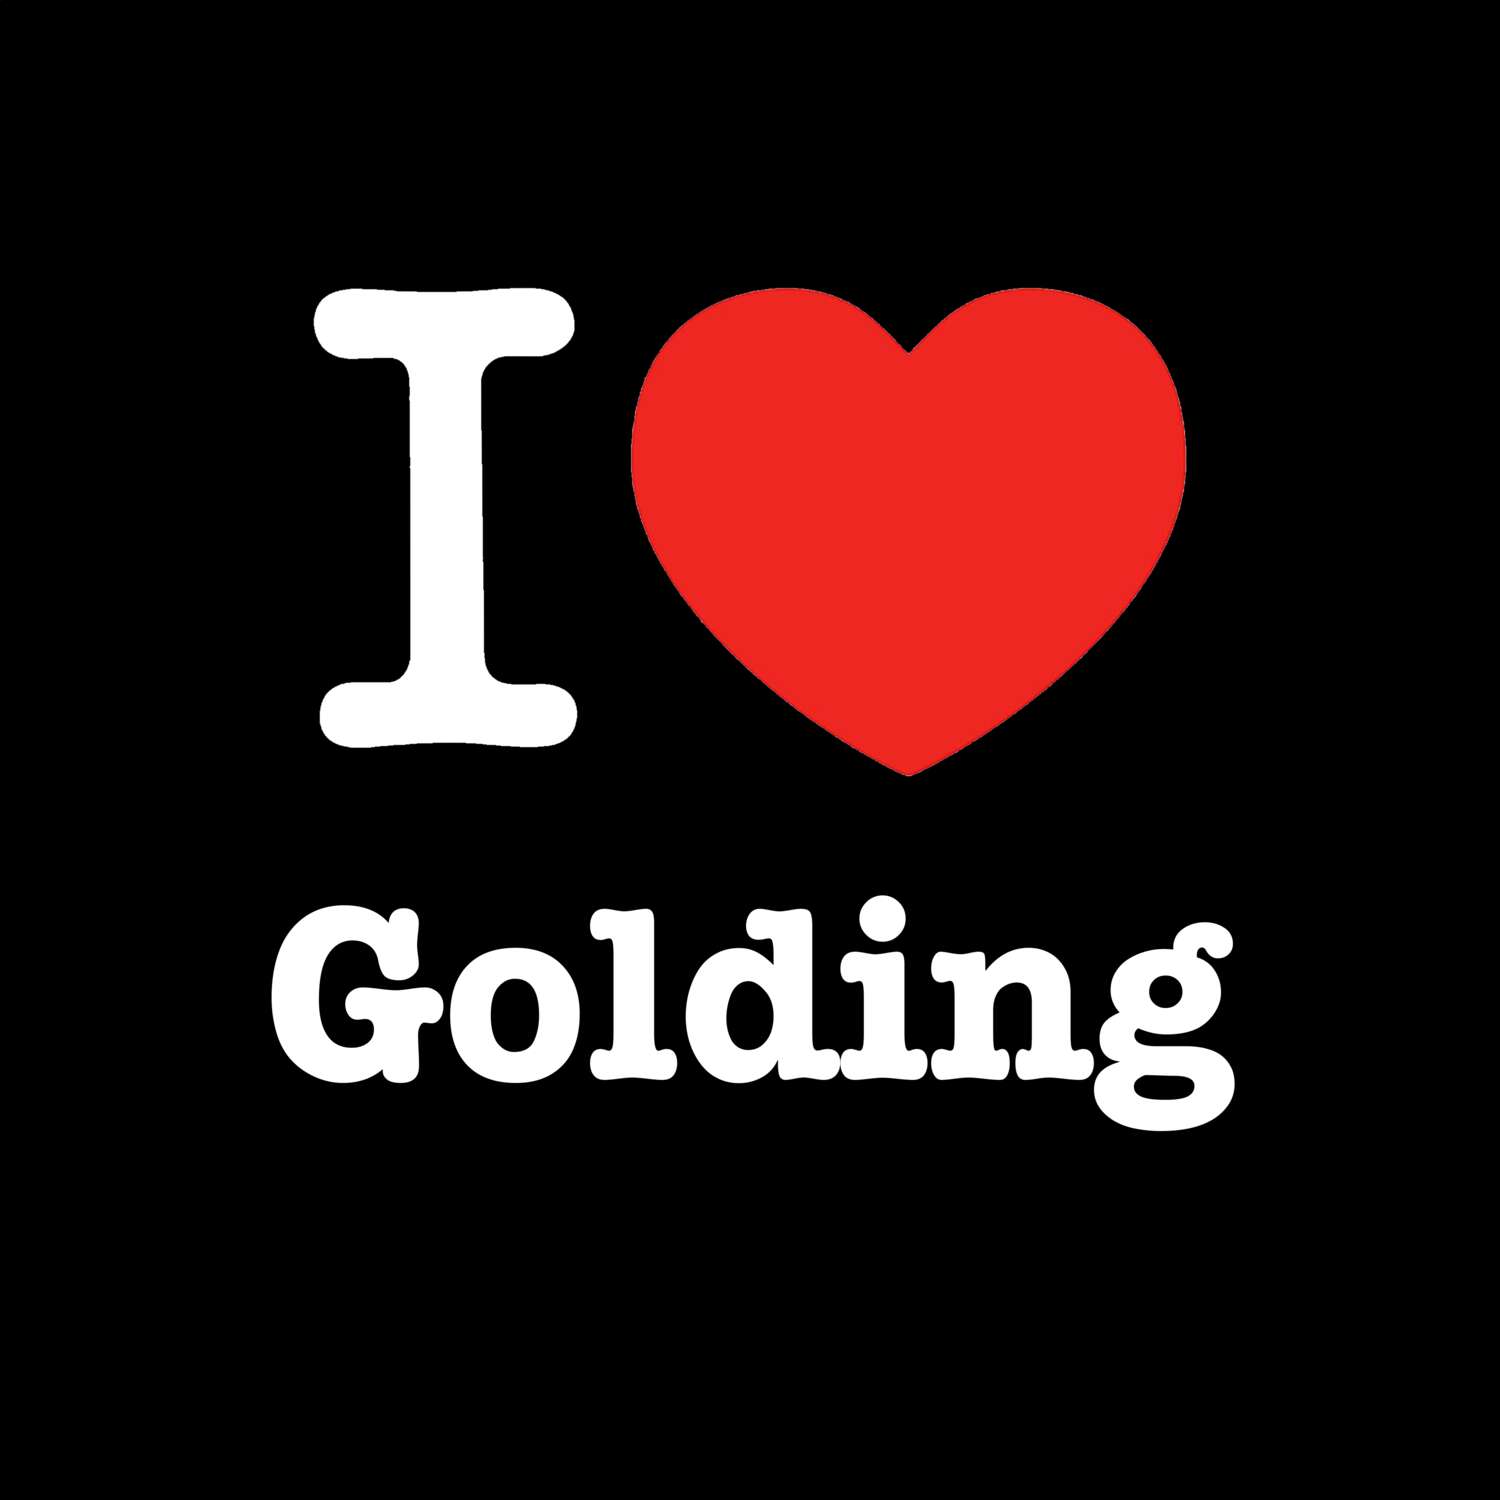 Golding T-Shirt »I love«